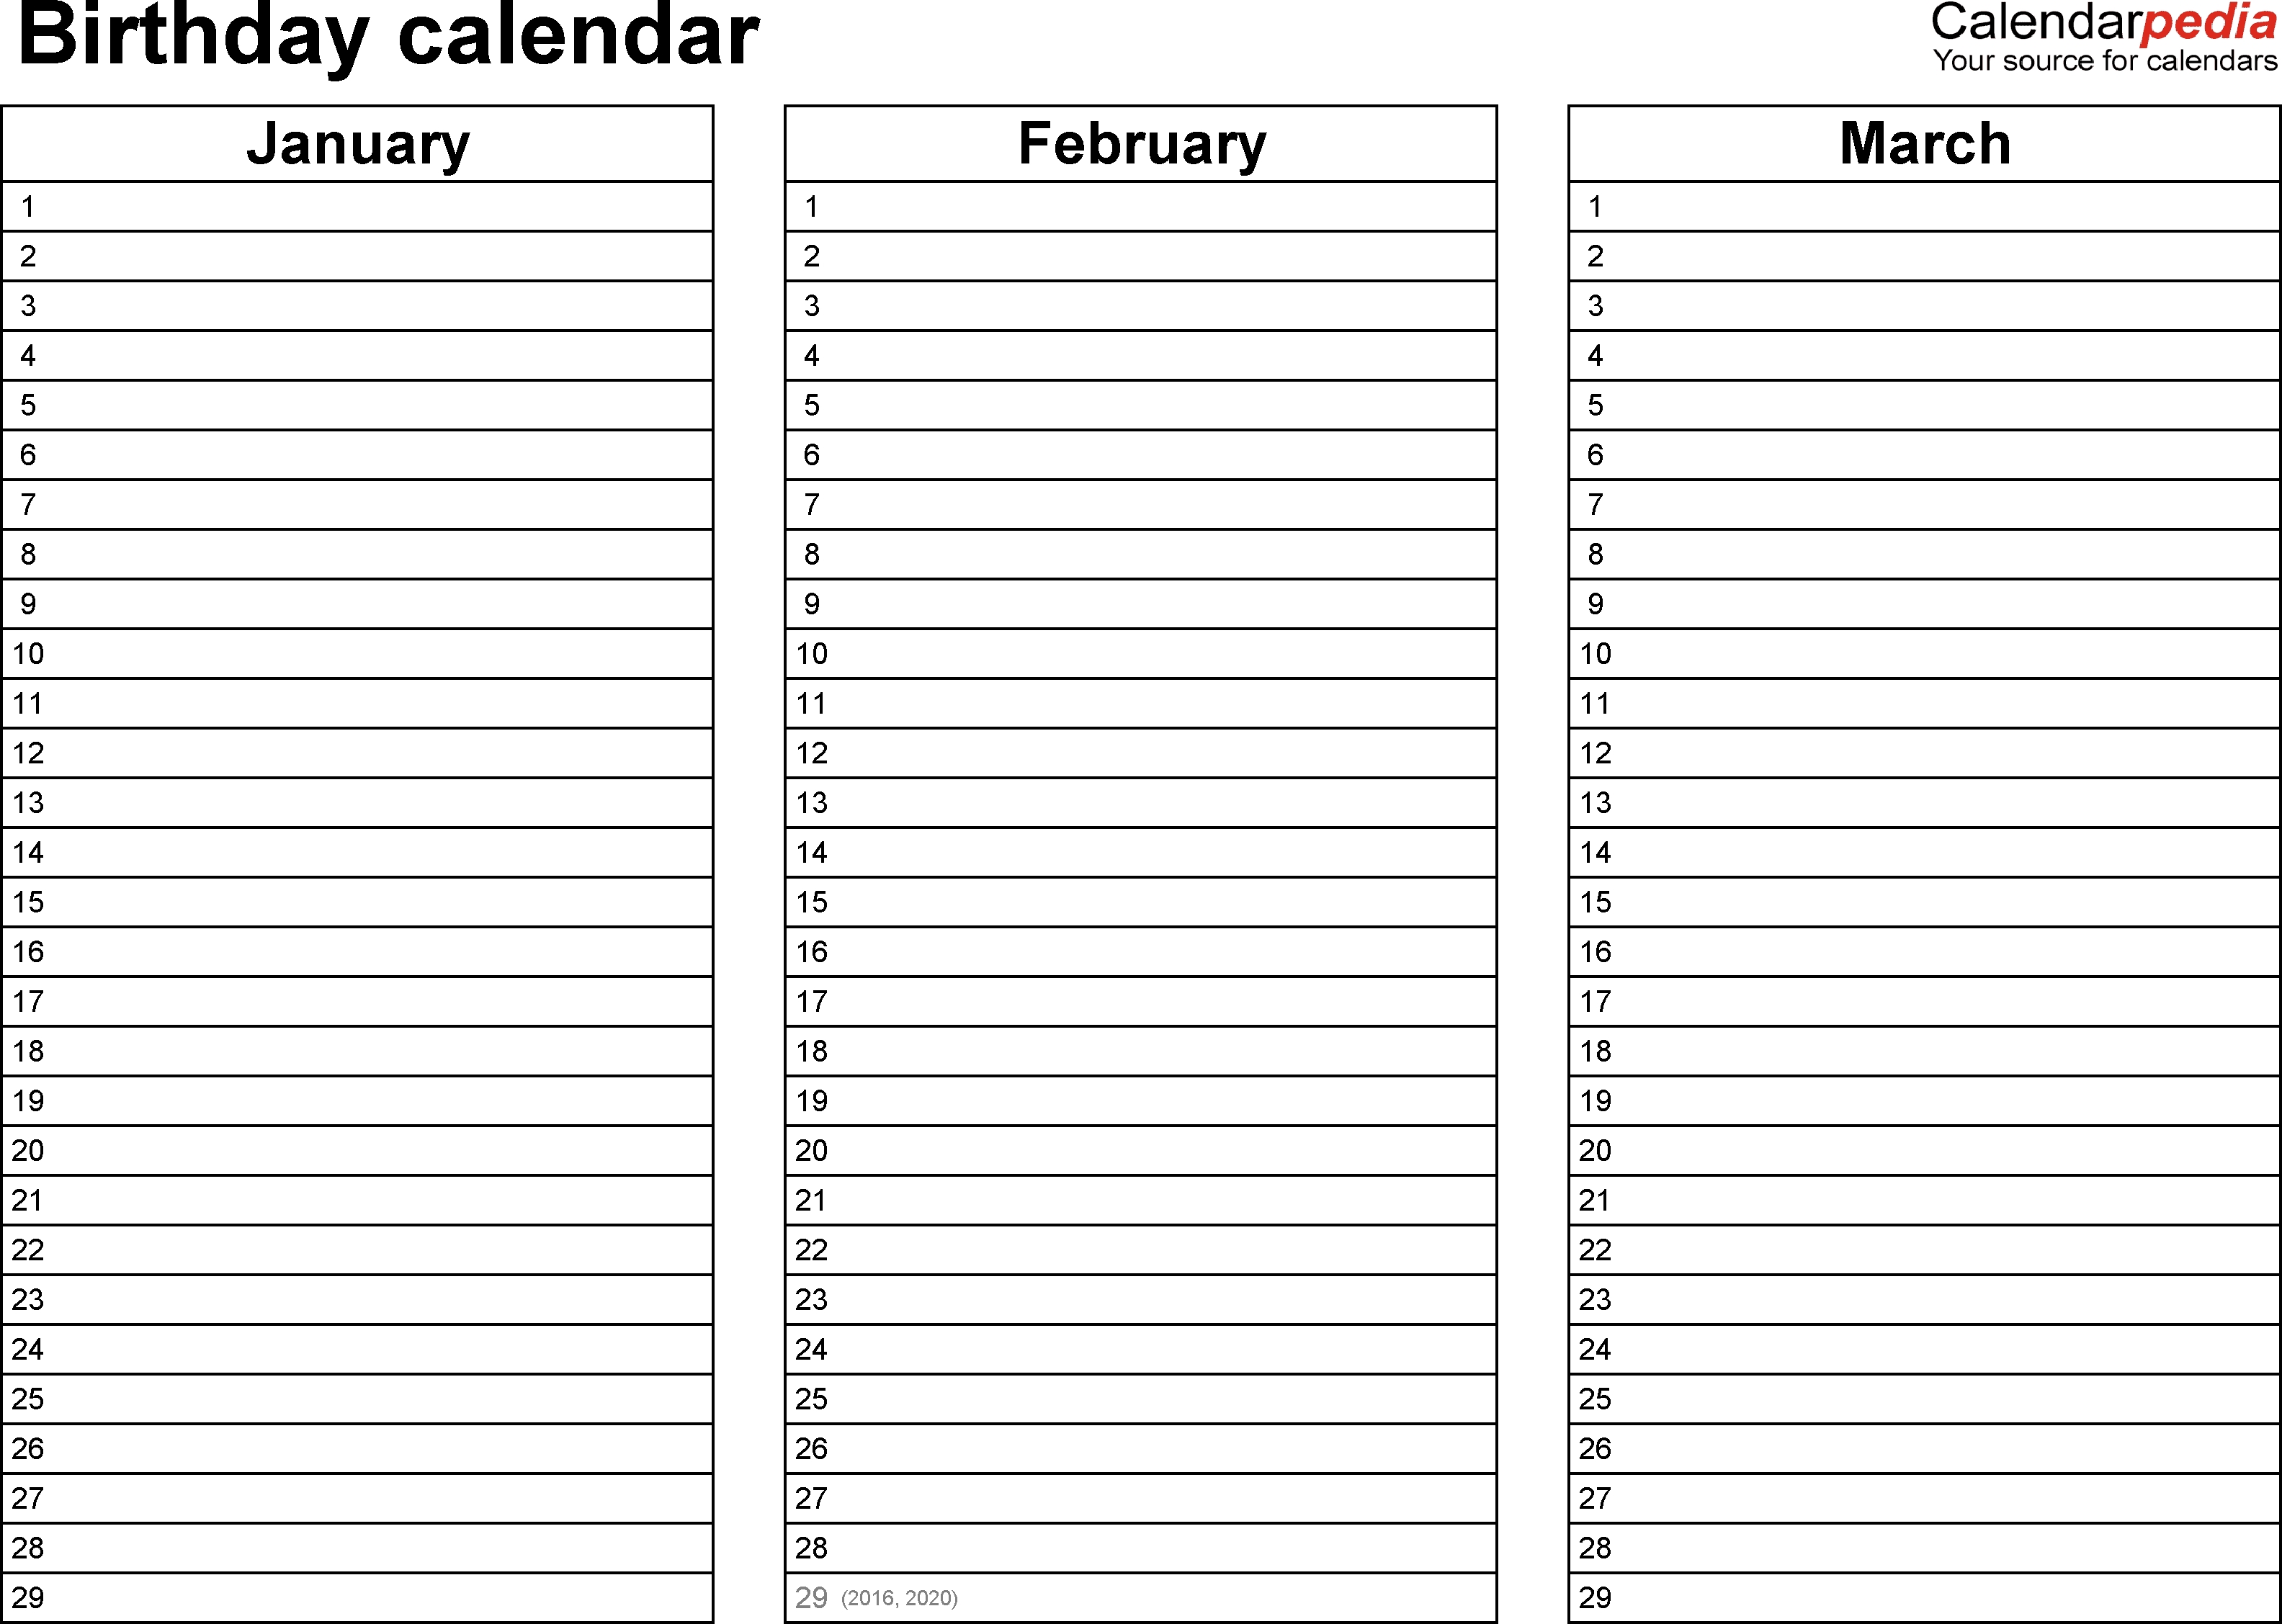 Birthday Calendars - 7 Free Printable Word Templates intended for Free Printable Birthday Calendar Template